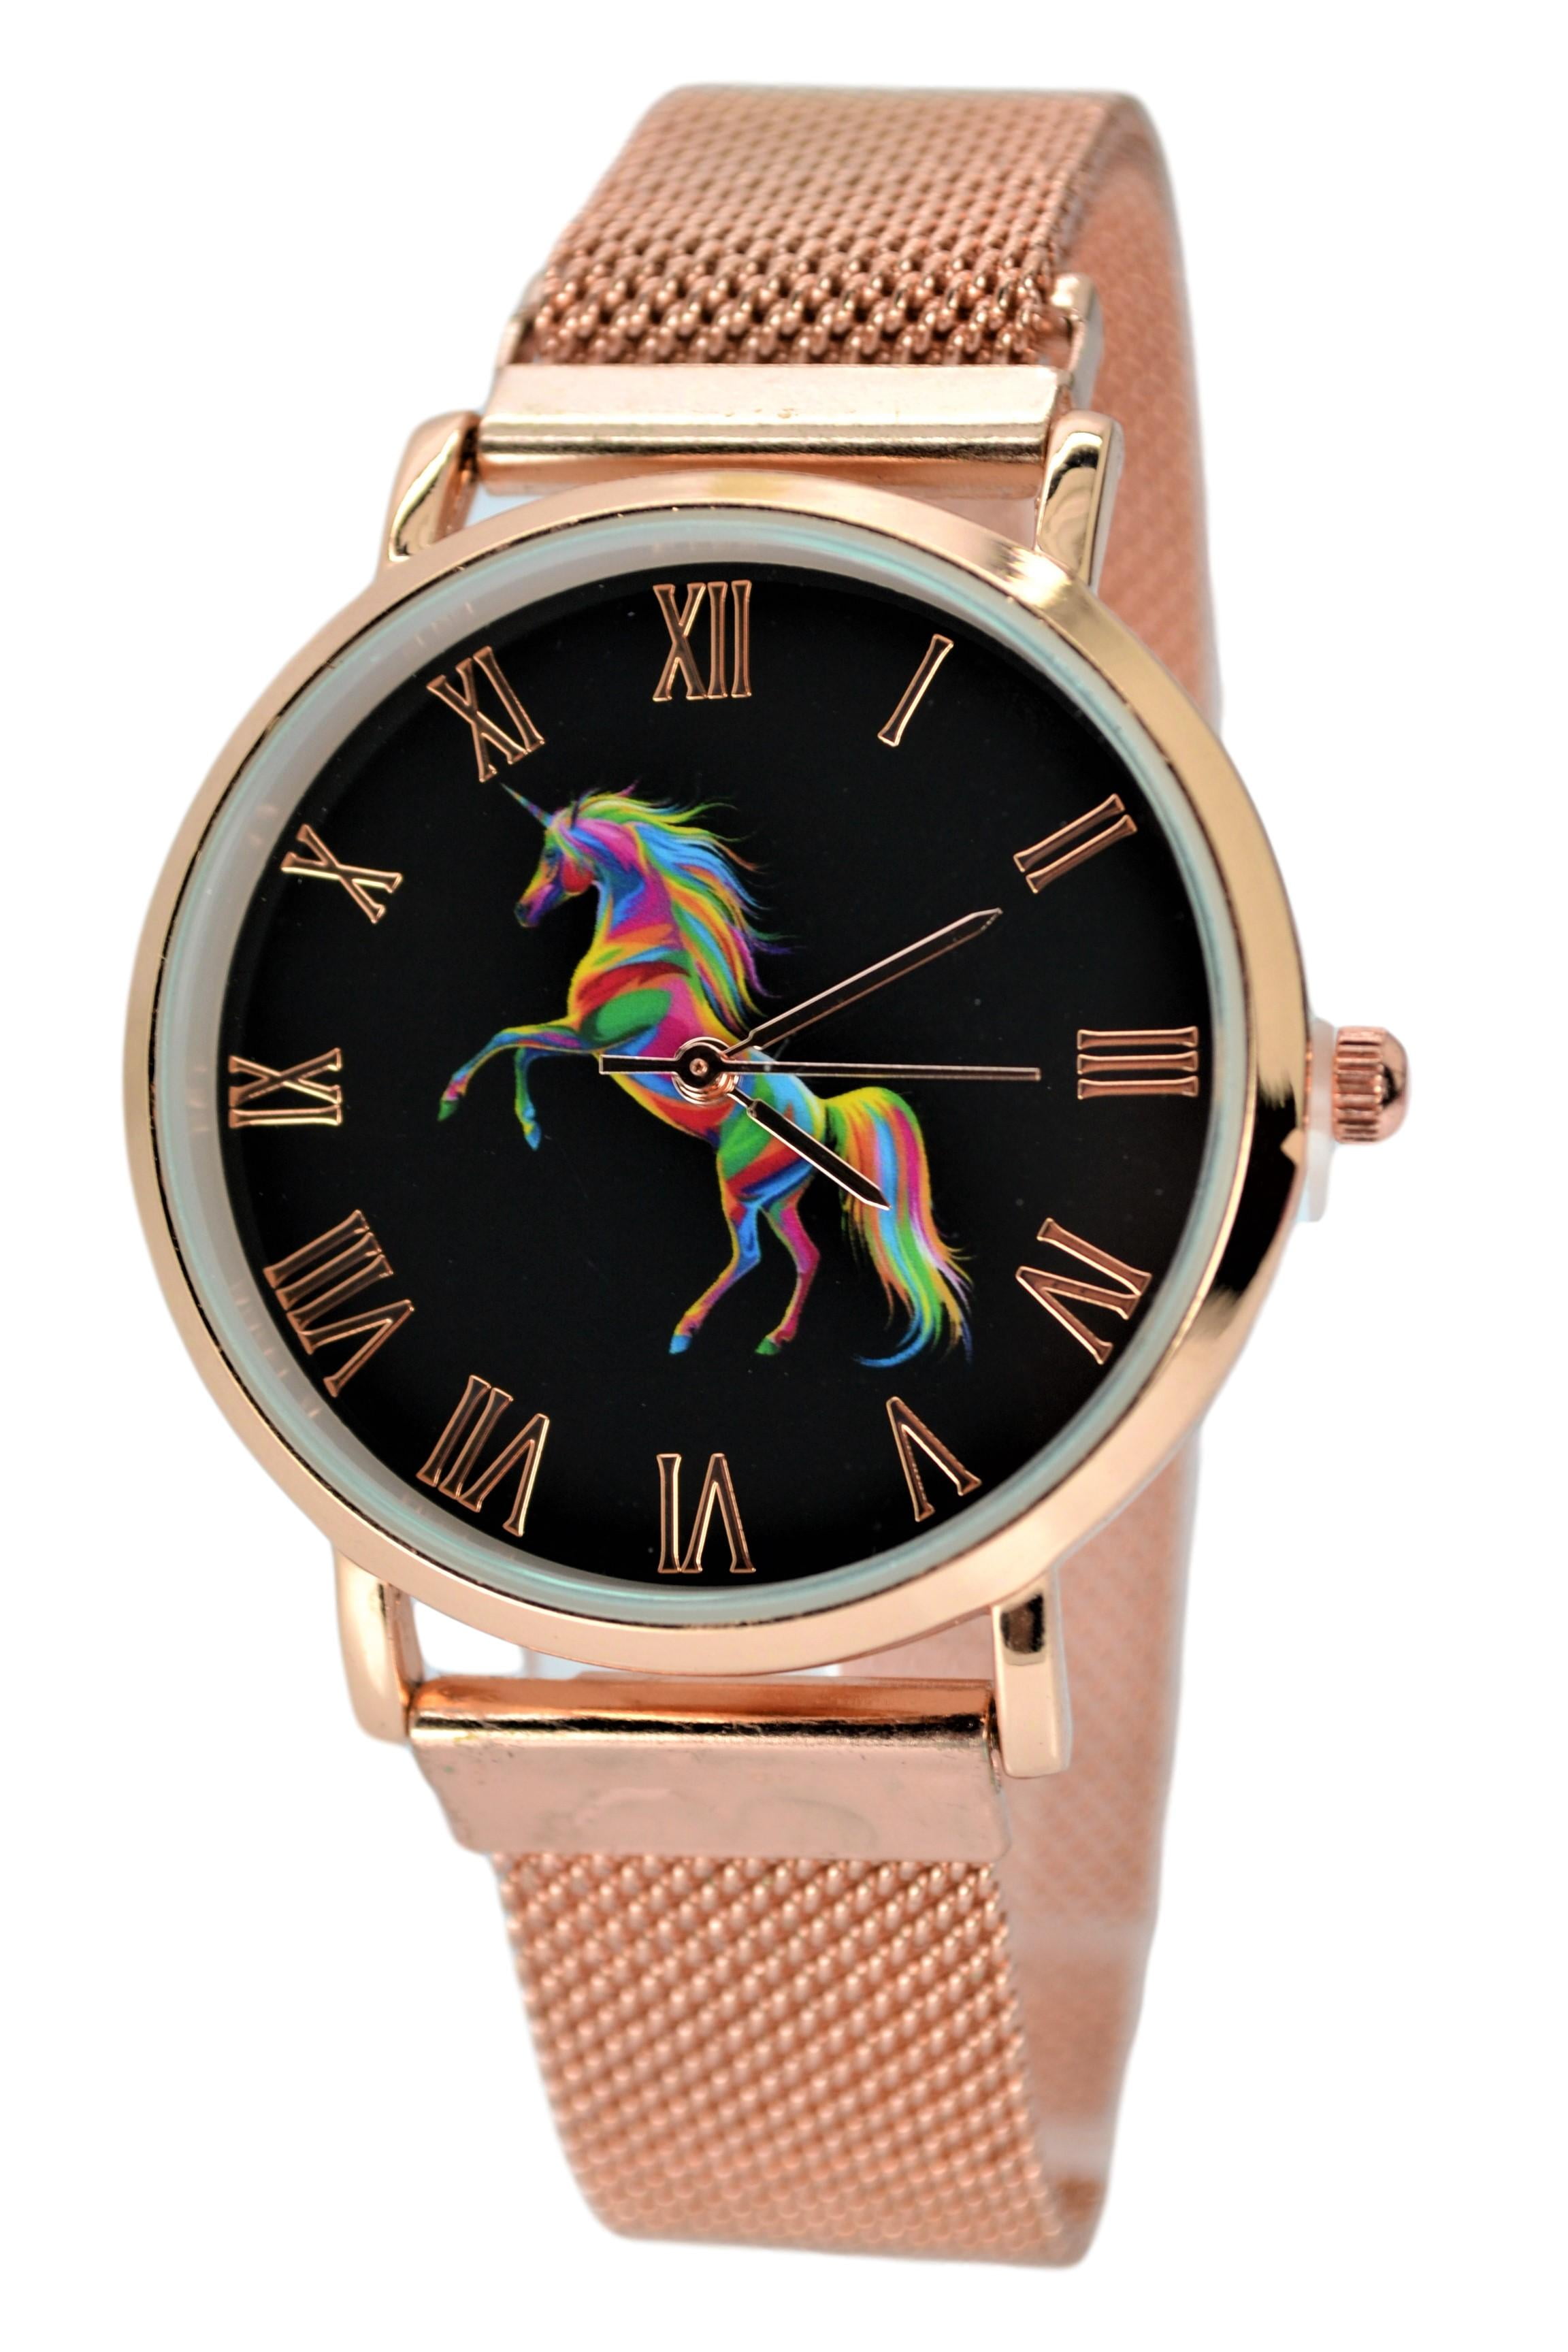 RRI - Lucky Women's Girl's Unicorn Gift Watches Analog Quartz Rose-Gold